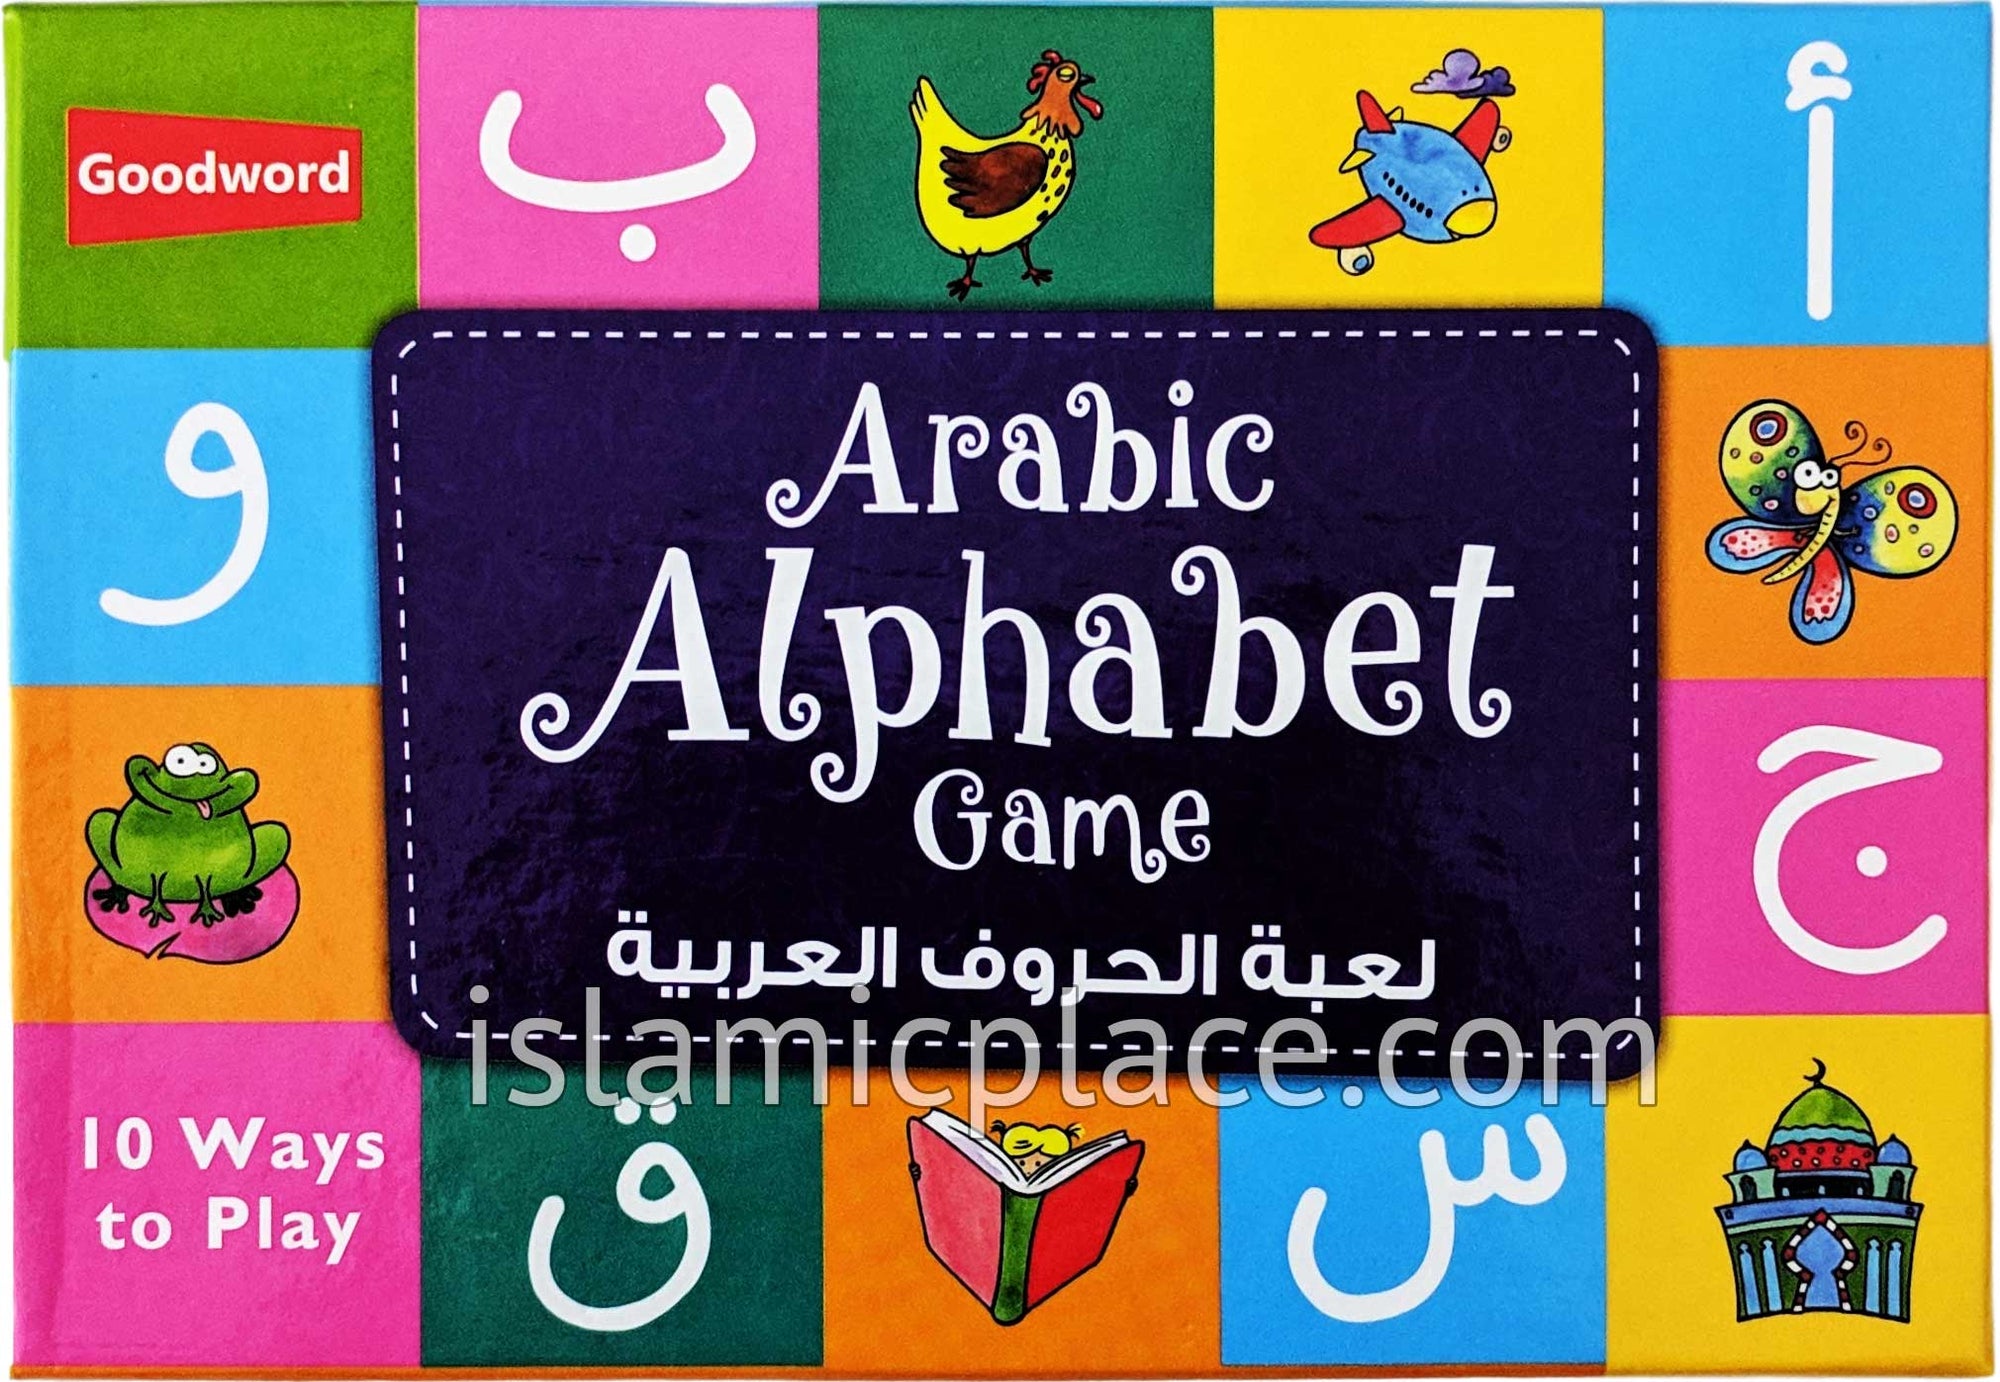 Arabic Alphabet Game (Lu'batul Huroof Al Arabia)